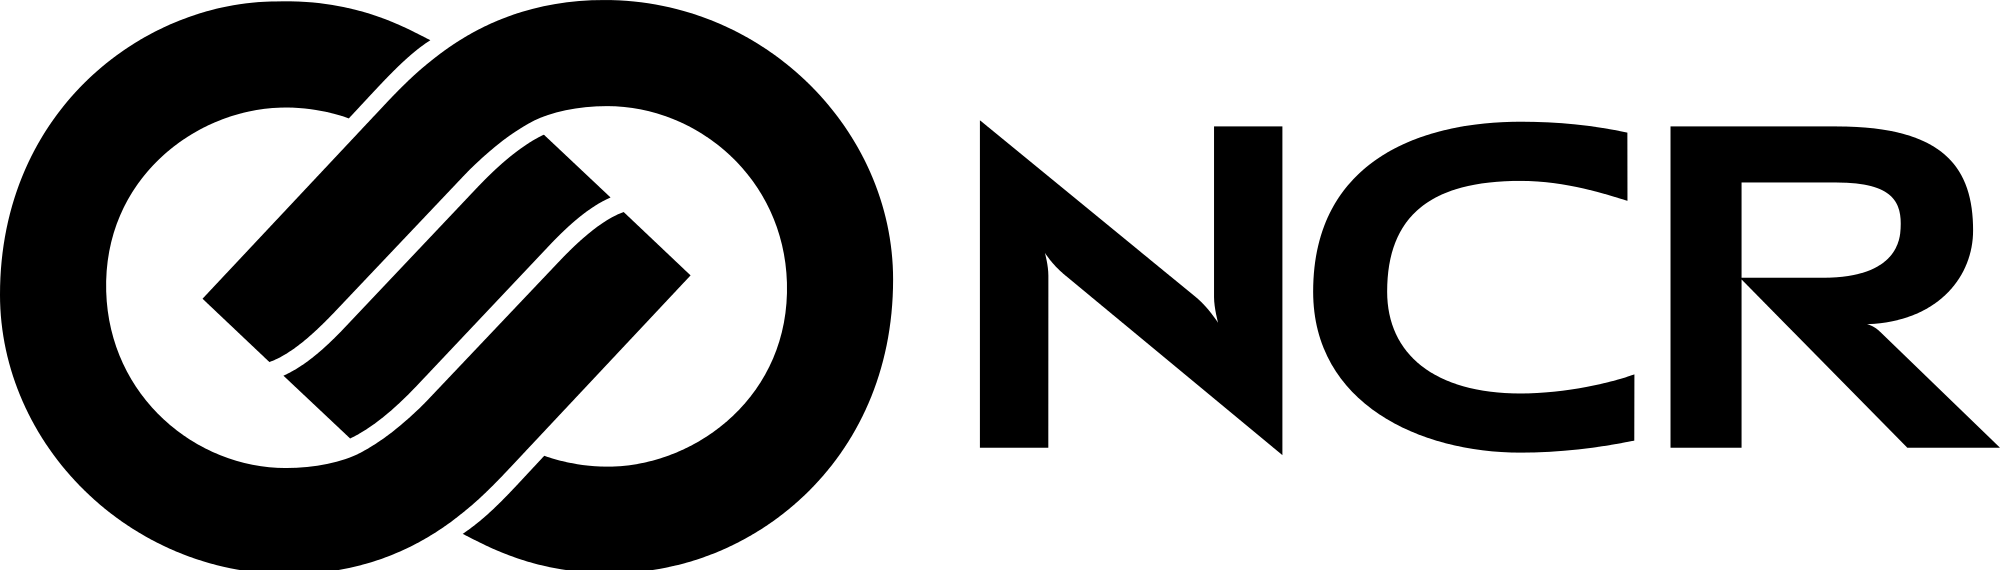 NCR Corporation Logo - NCR logo black.svg